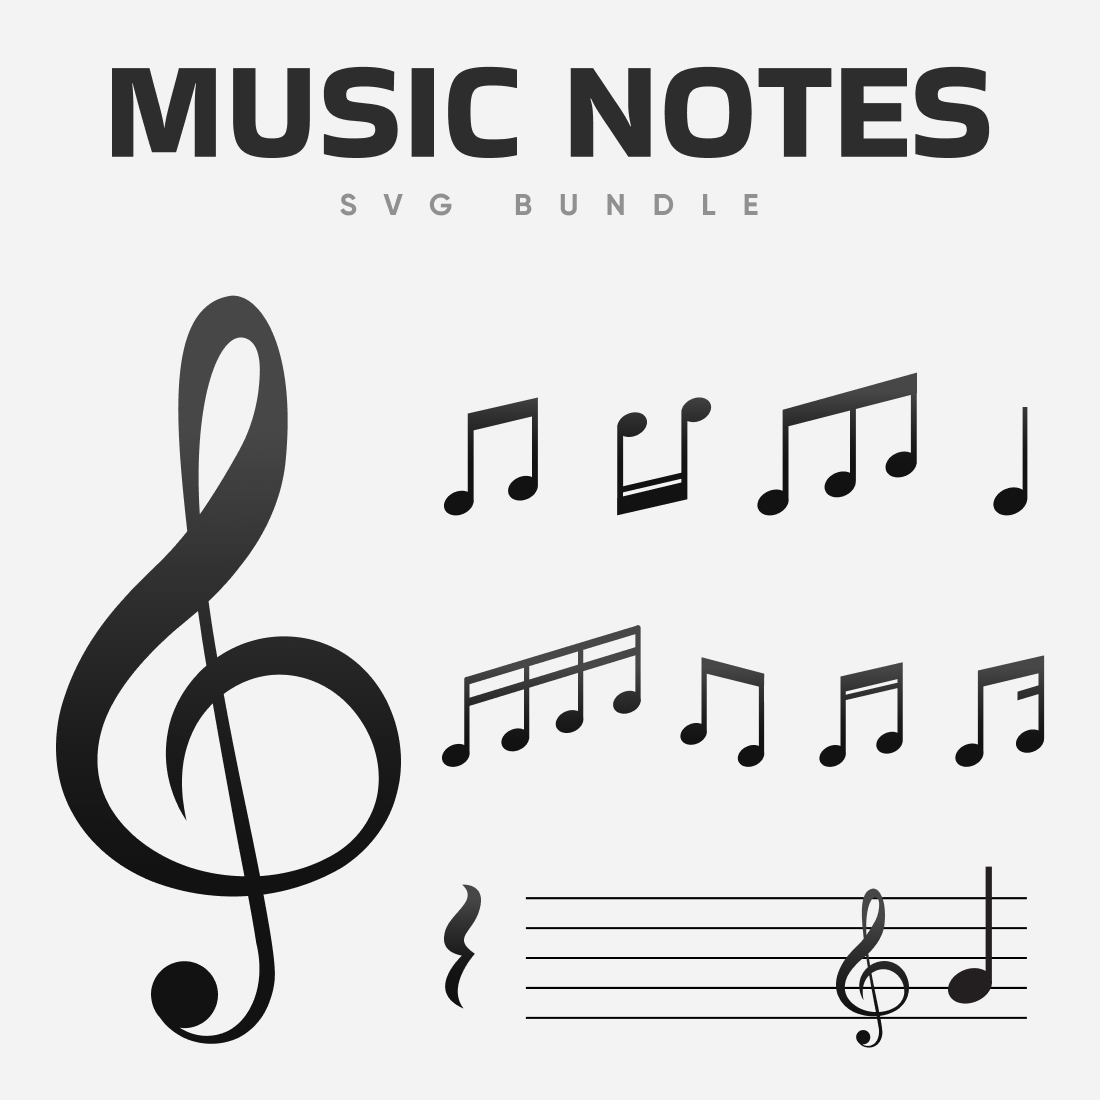 Music Notes SVG Bundle - Preview.